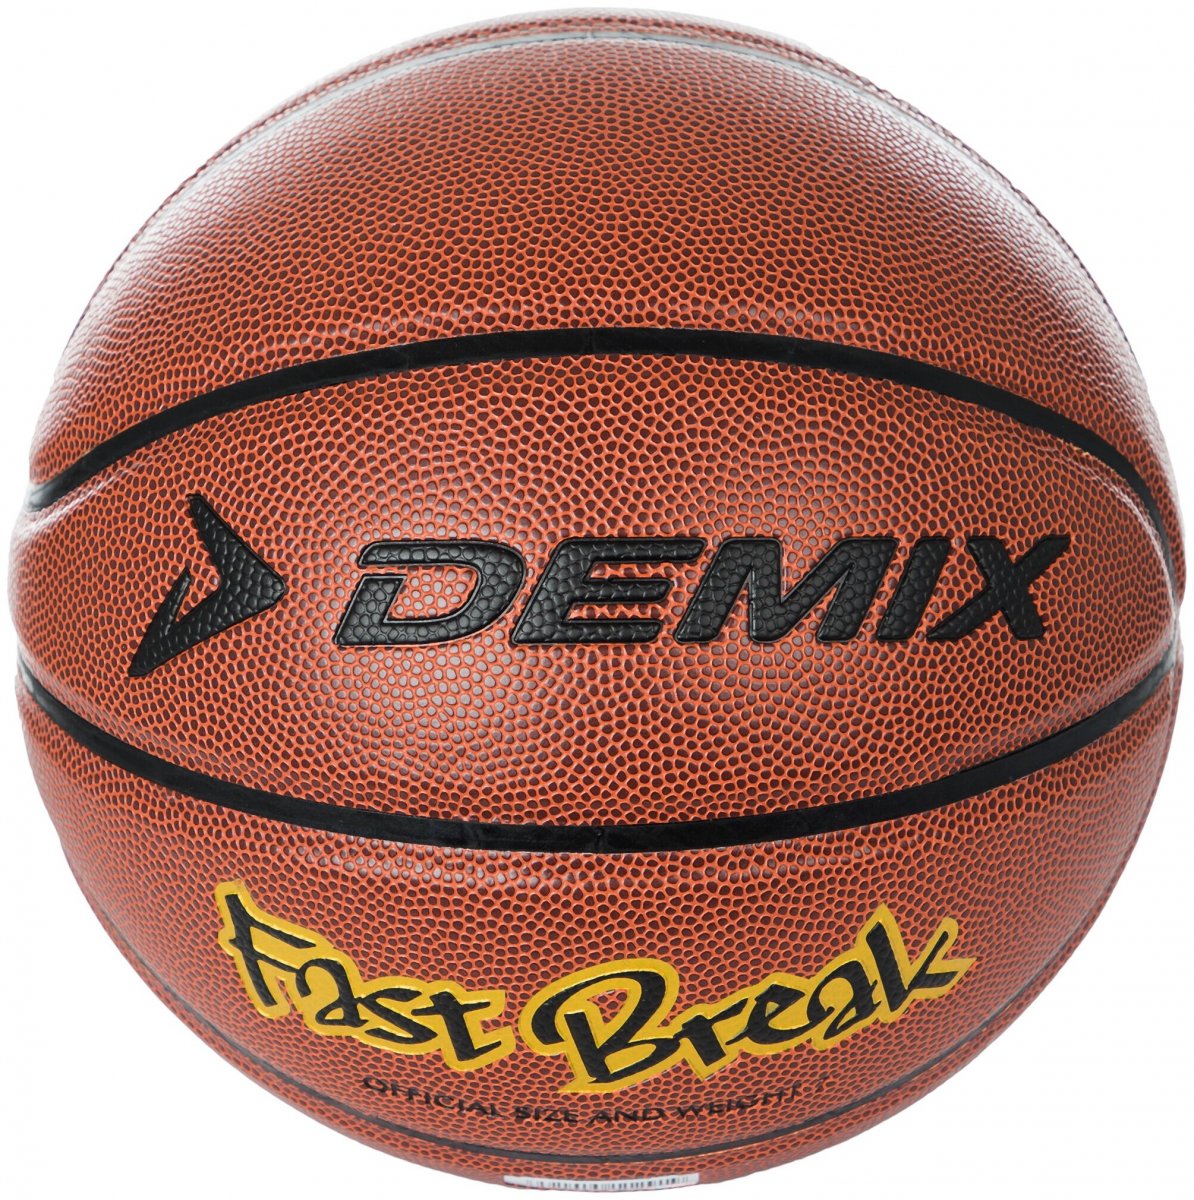 Баскетбольный мяч Conti BC 6